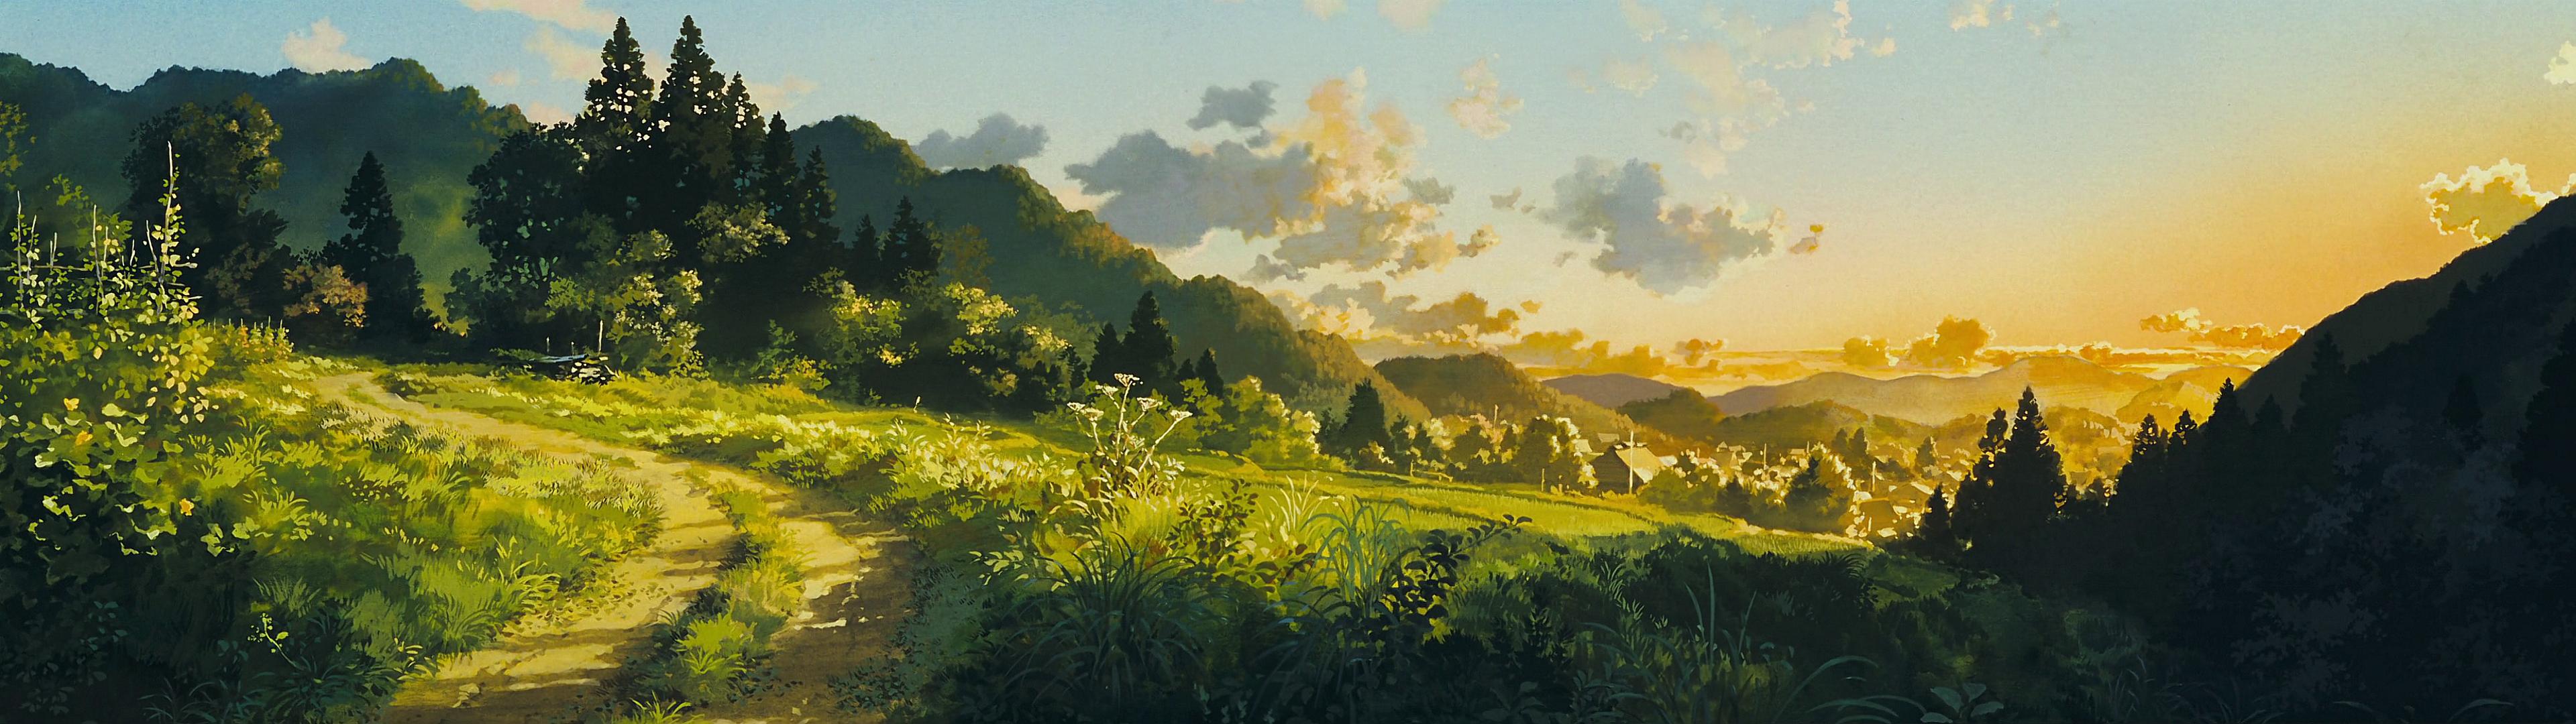 03 - Only Yesterday - Studio Ghibli Background Paintings - HD Wallpaper 